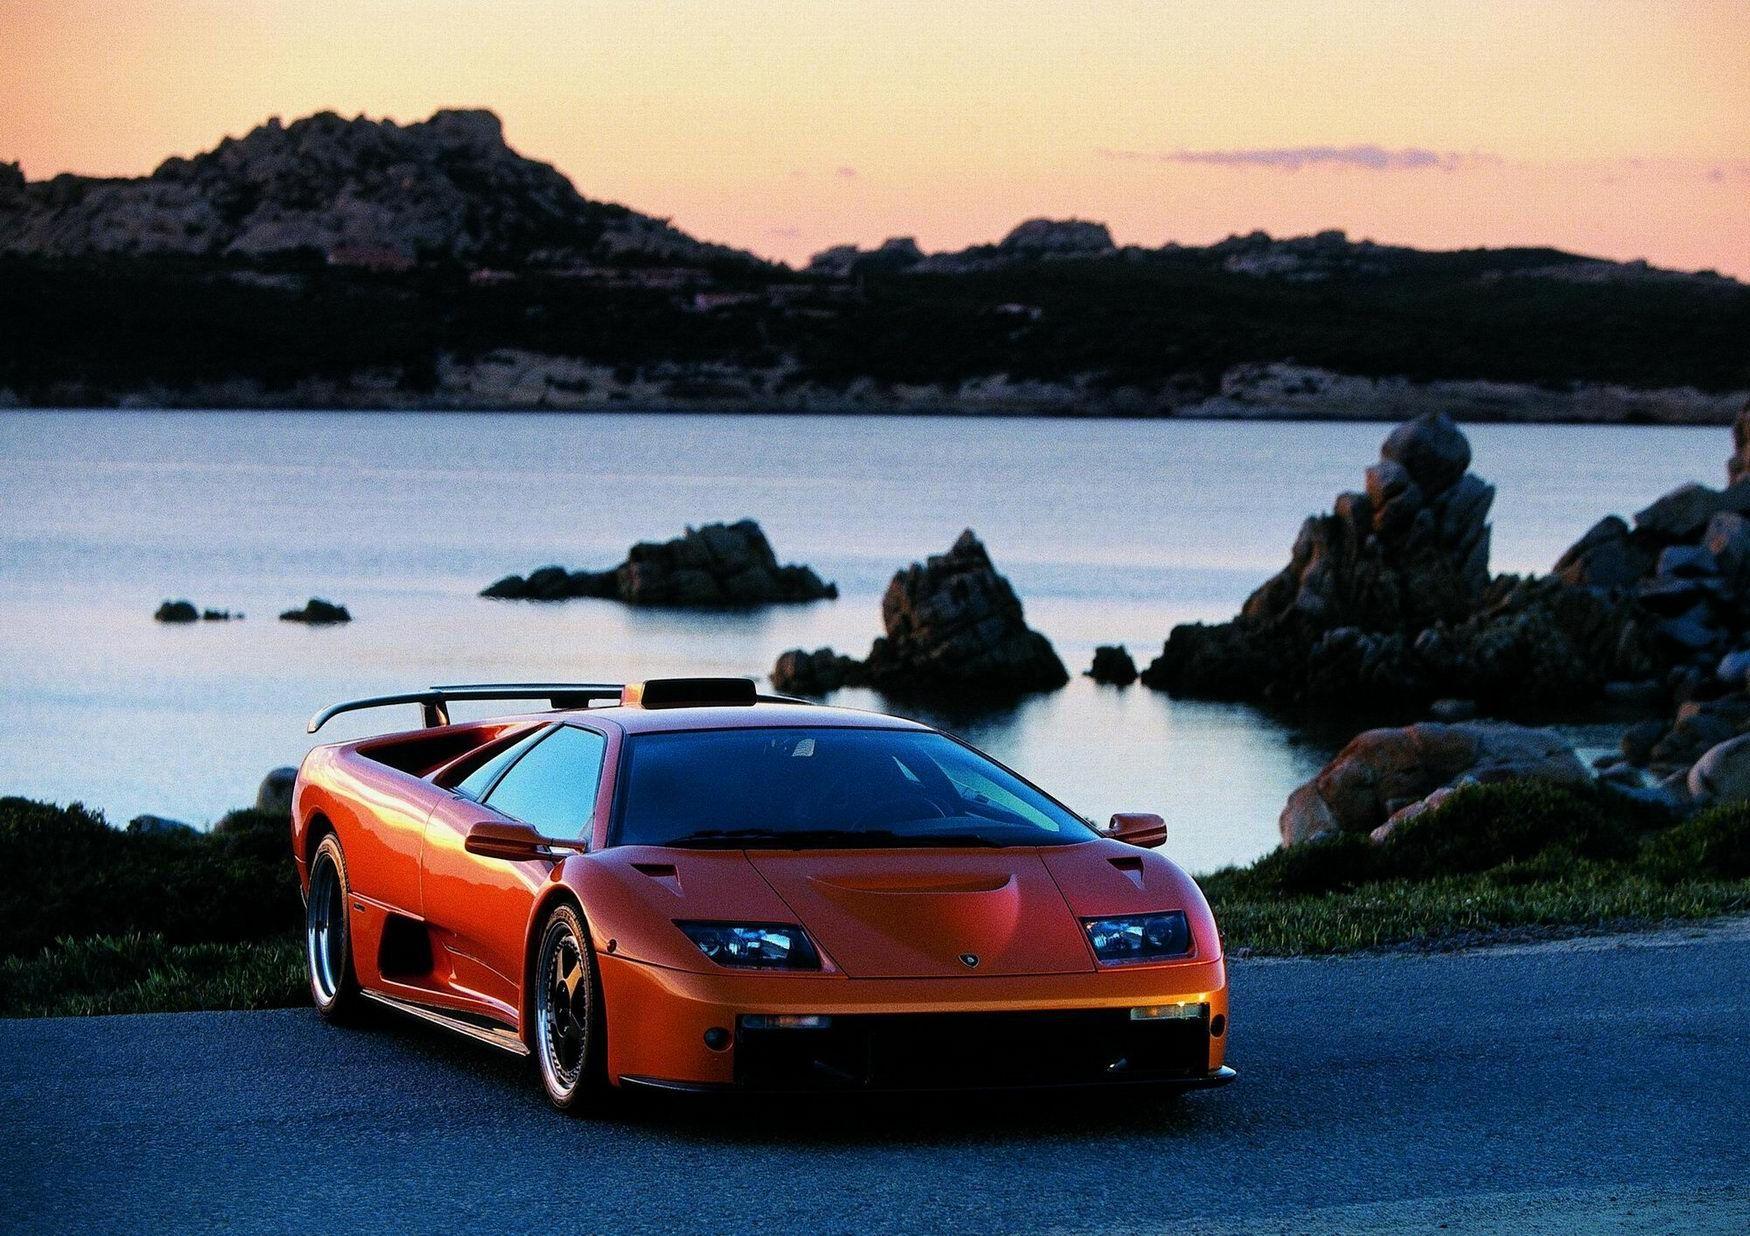 Lamborghini Diablo Wallpapers - Top Free Lamborghini Diablo Backgrounds